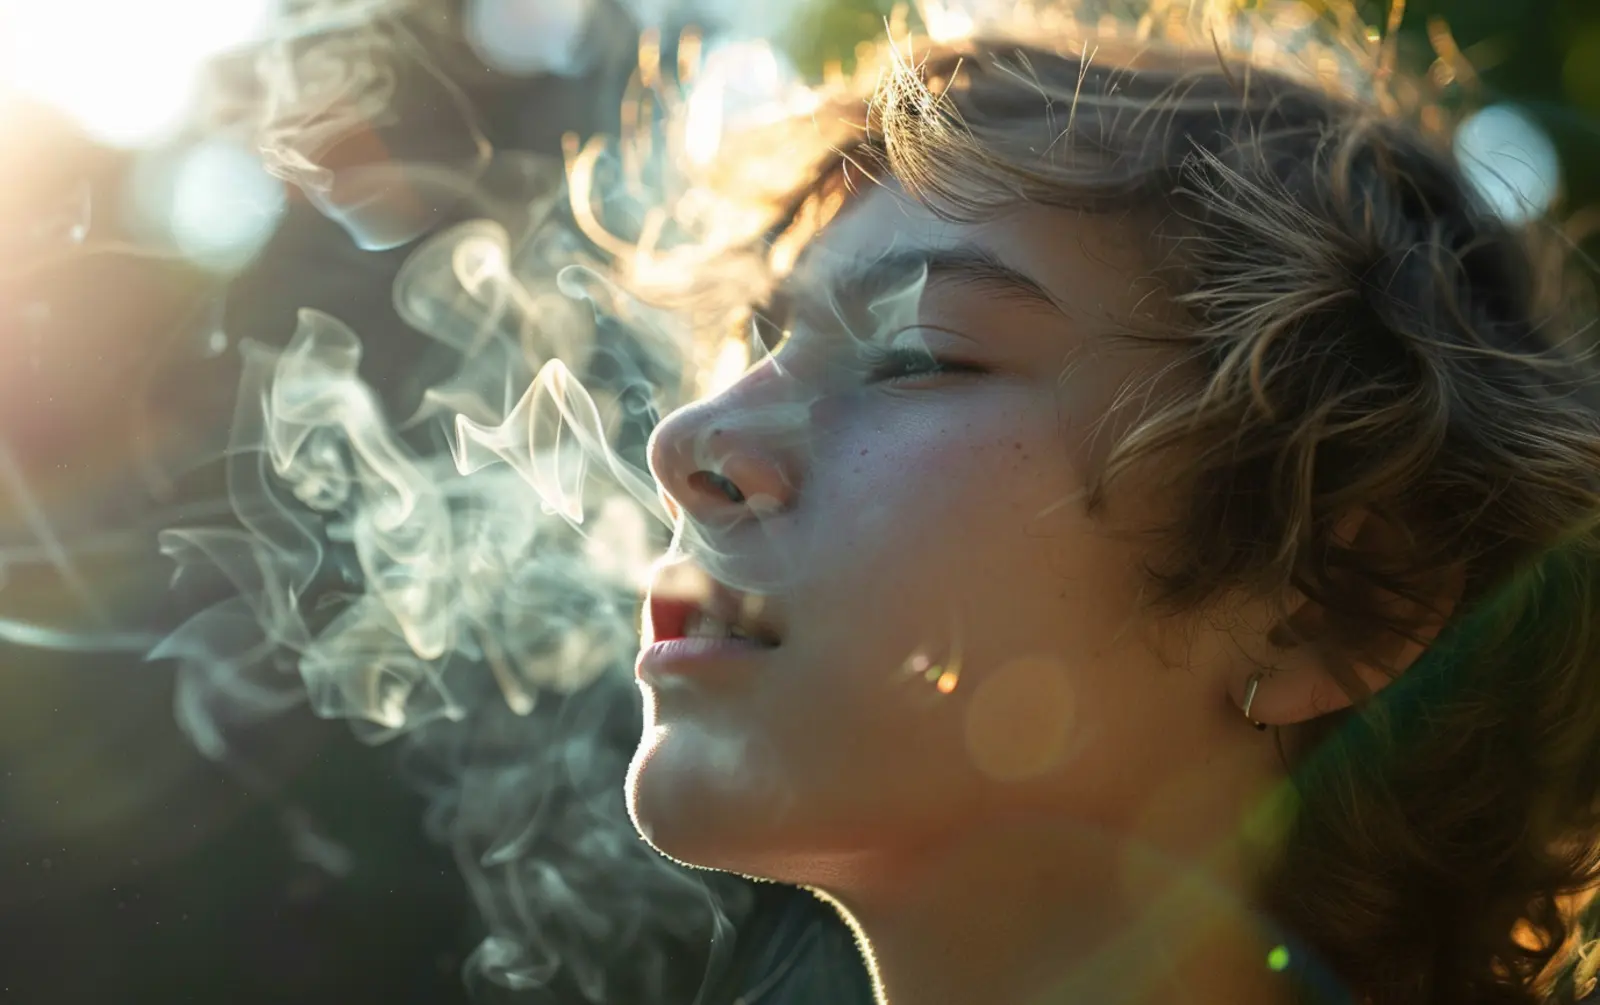 teen exhaling out marijuana smoke